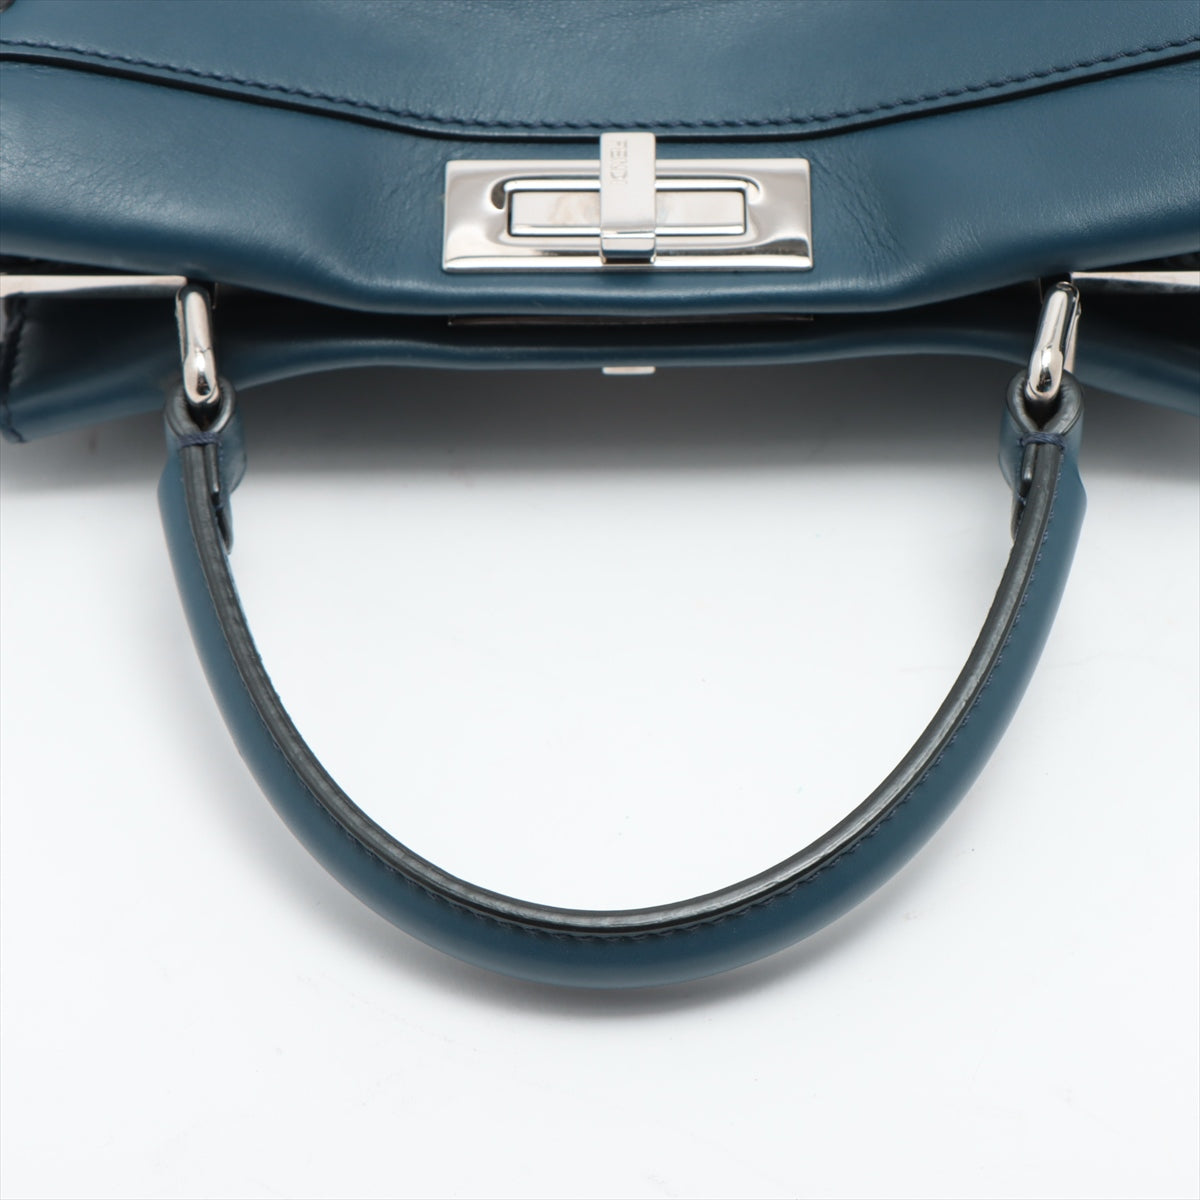 Fendi PEEKABOO REGULAR Leather Hand bag Blue 8BN290